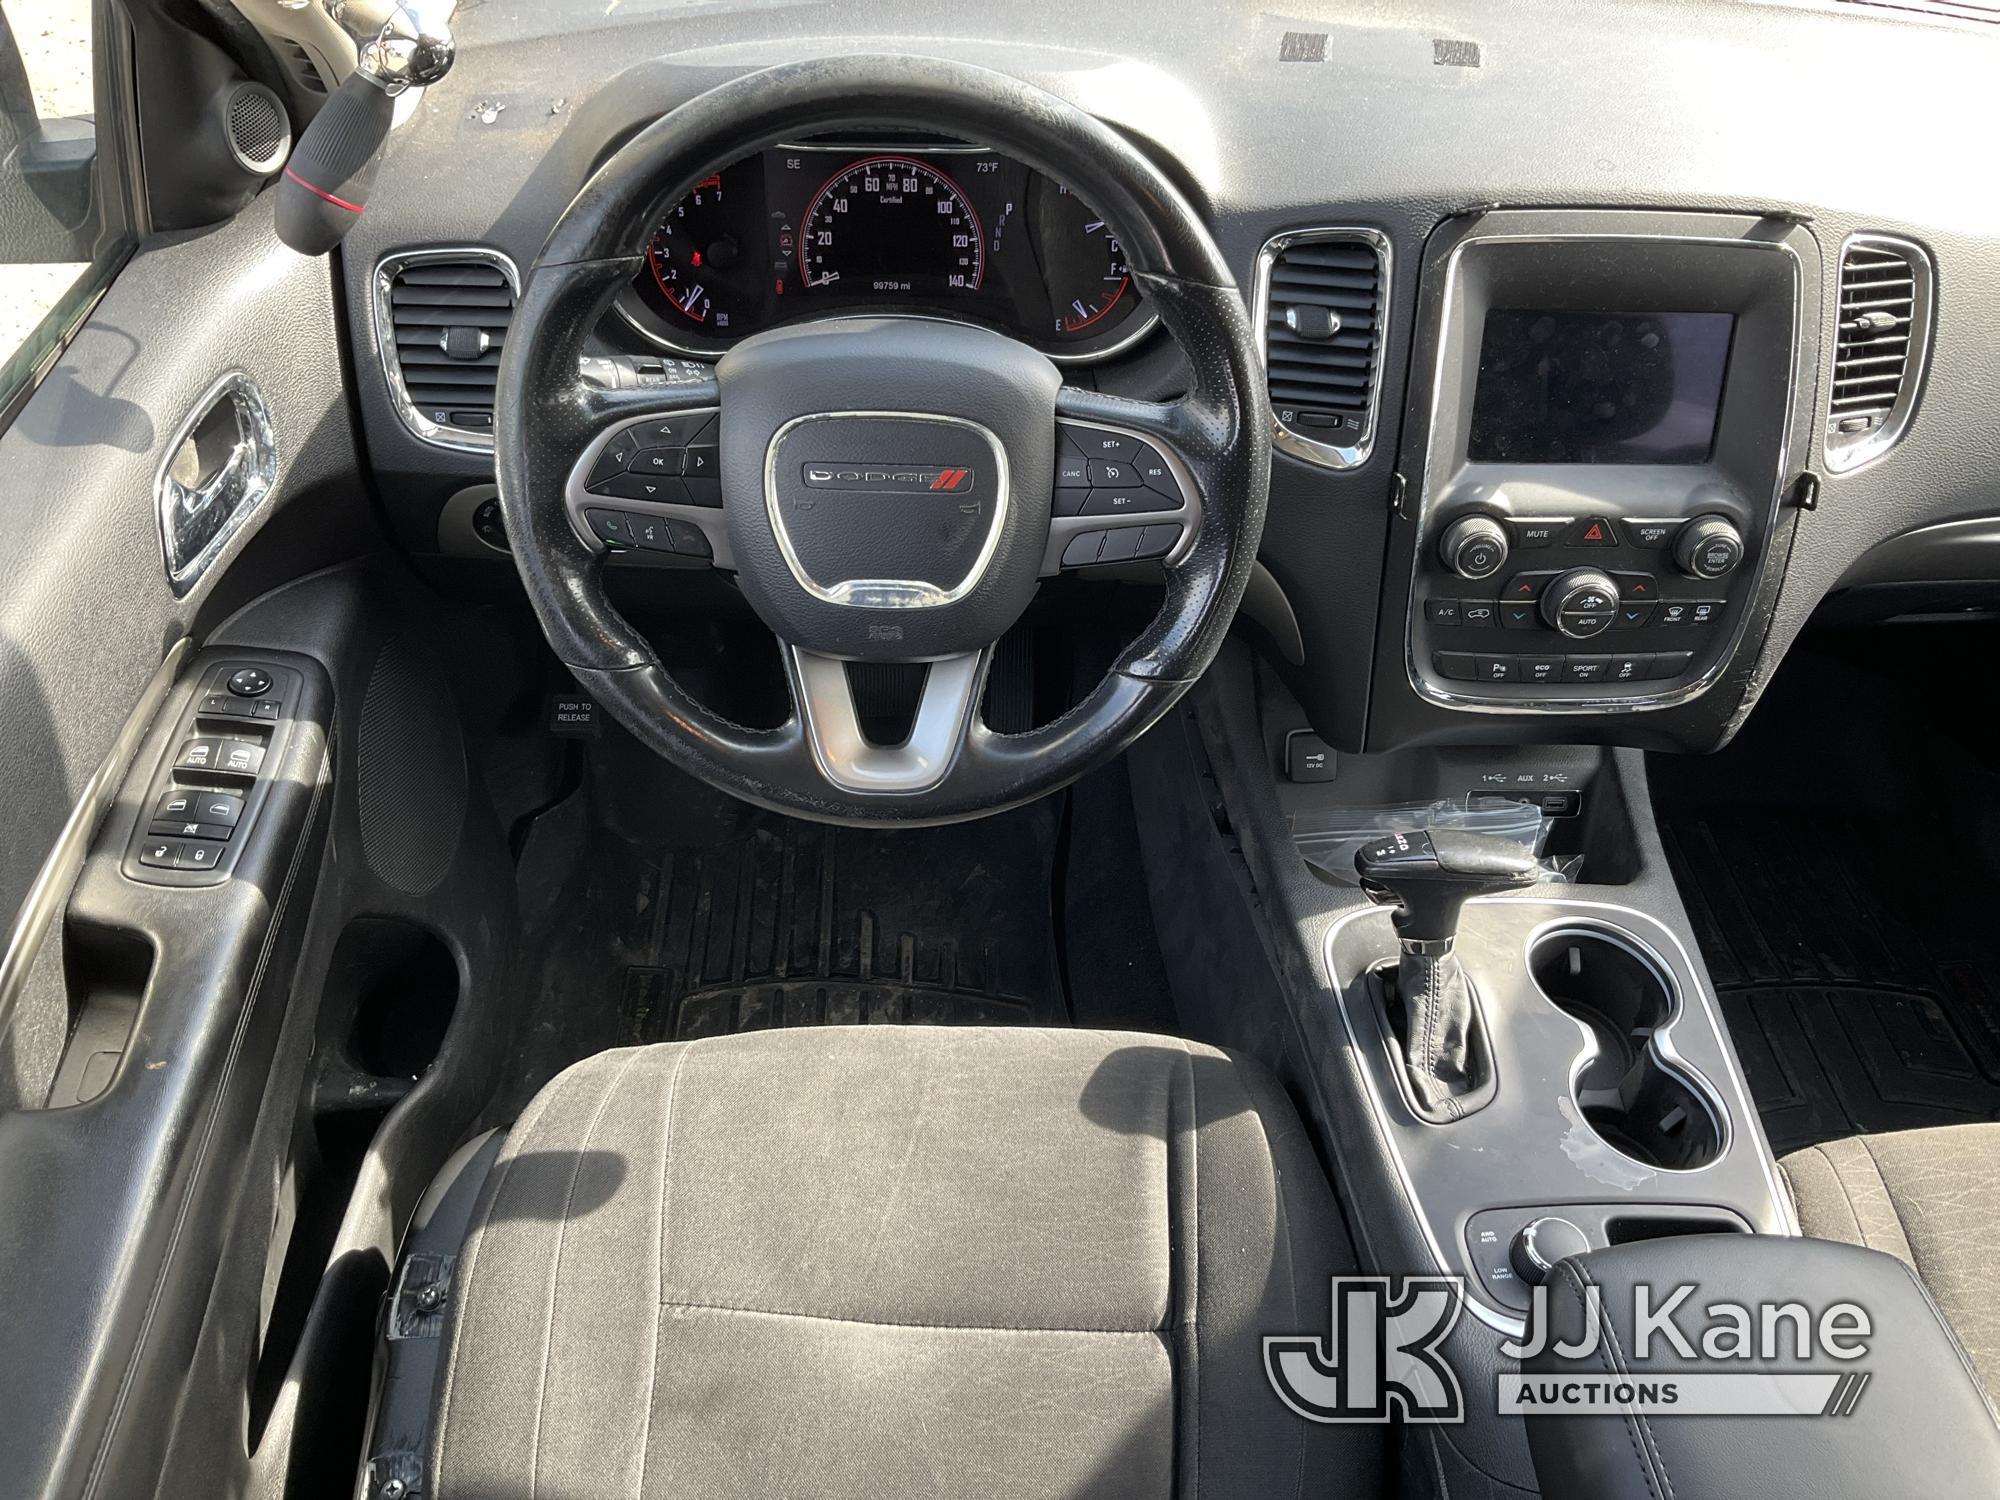 (South Beloit, IL) 2018 Dodge Durango AWD 4-Door Sport Utility Vehicle Runs, Moves